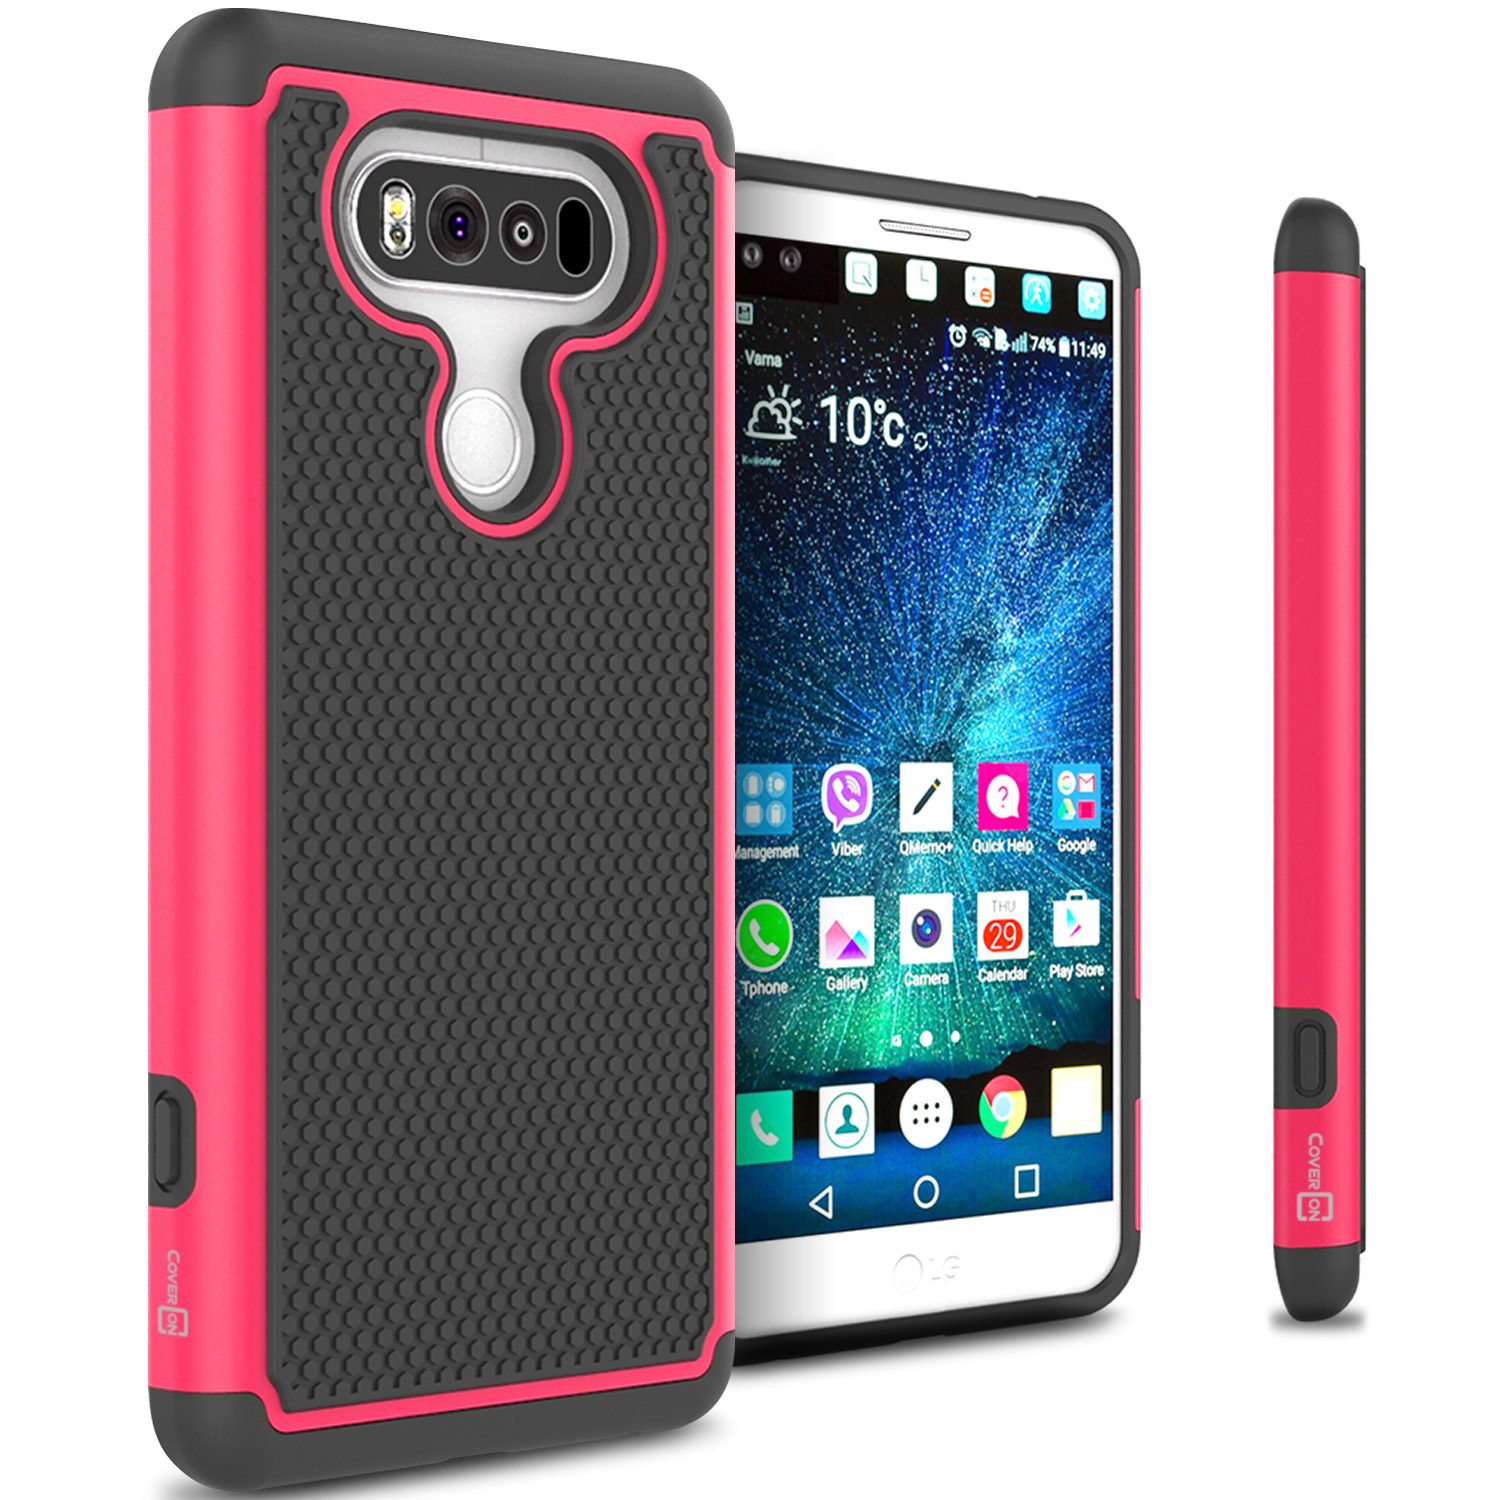 LG V20 case in hot pink and black